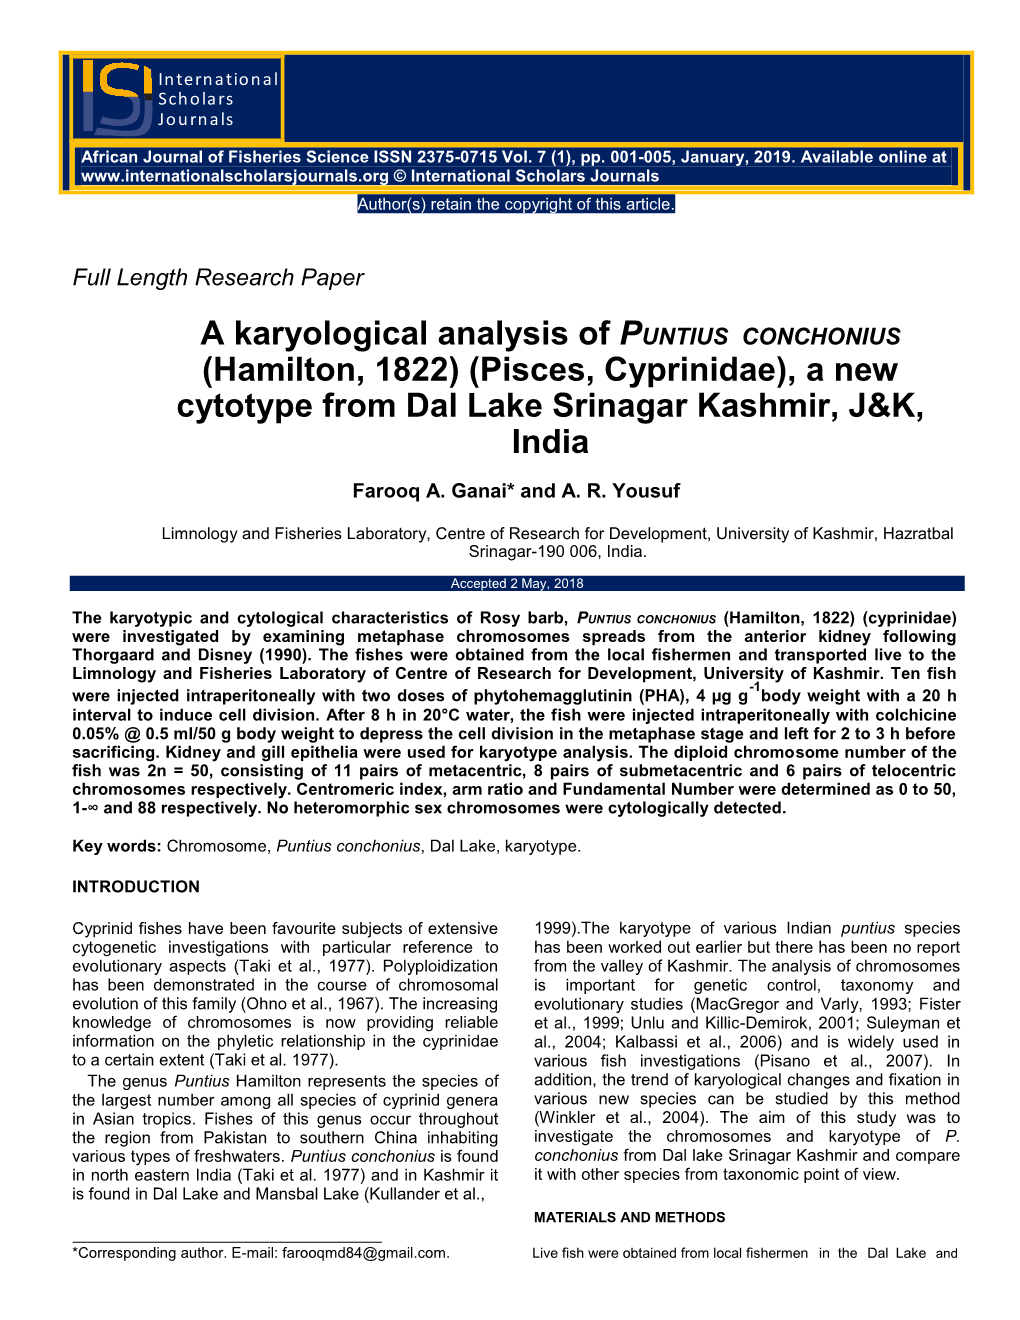 A Karyological Analysis of PUNTIUS CONCHONIUS (Hamilton, 1822) (Pisces, Cyprinidae), a New Cytotype from Dal Lake Srinagar Kashmir, J&K, India